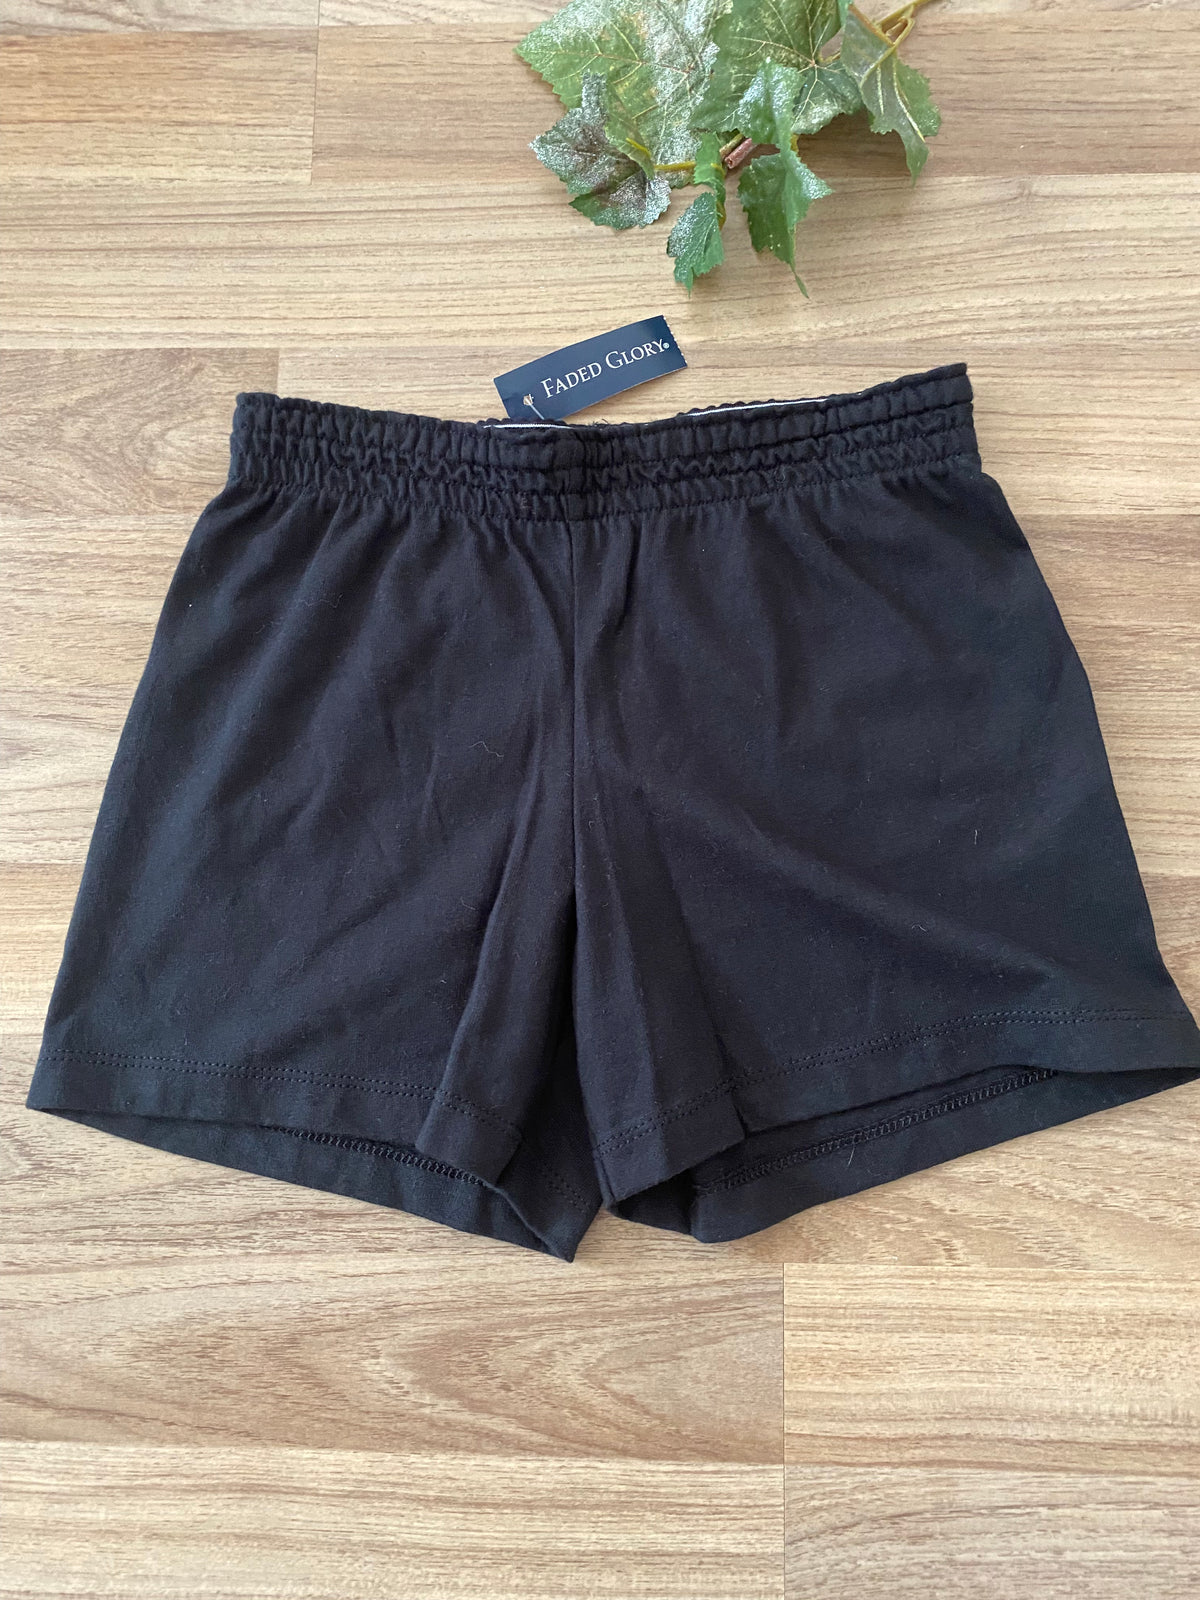 Shorts (Girls Size 6-6X)